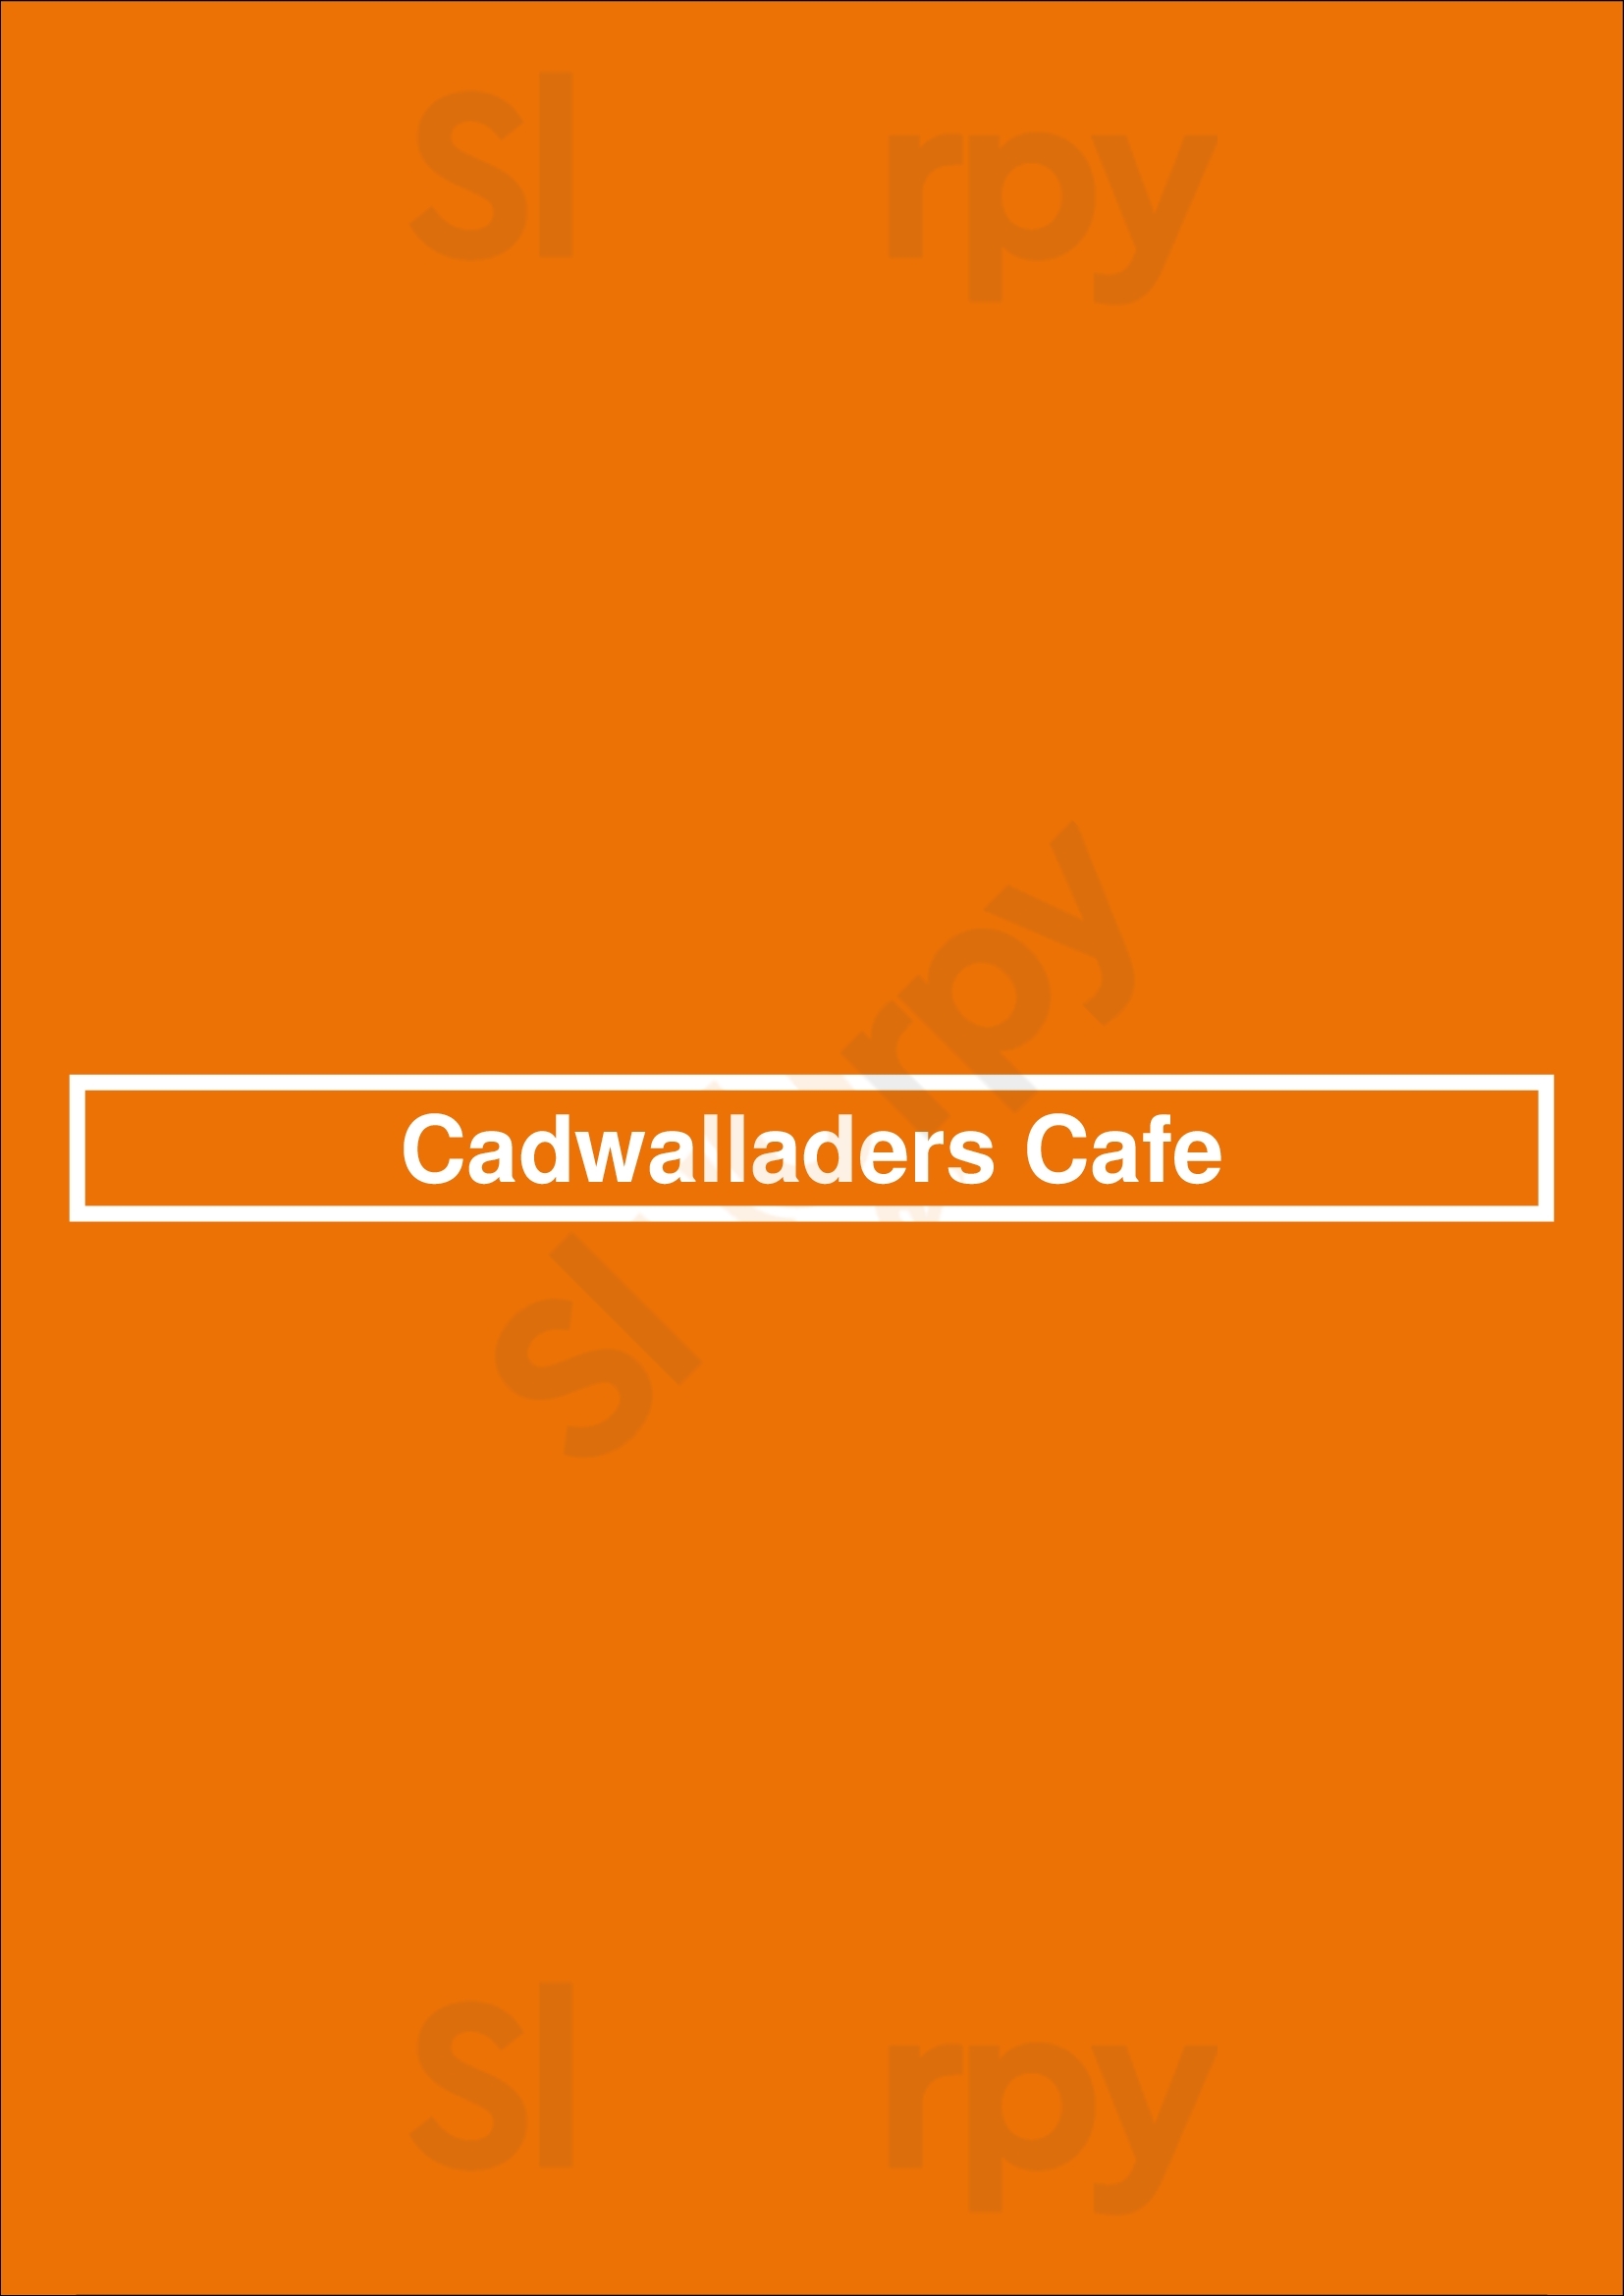 Cadwalladers Cafe Augusta Menu - 1